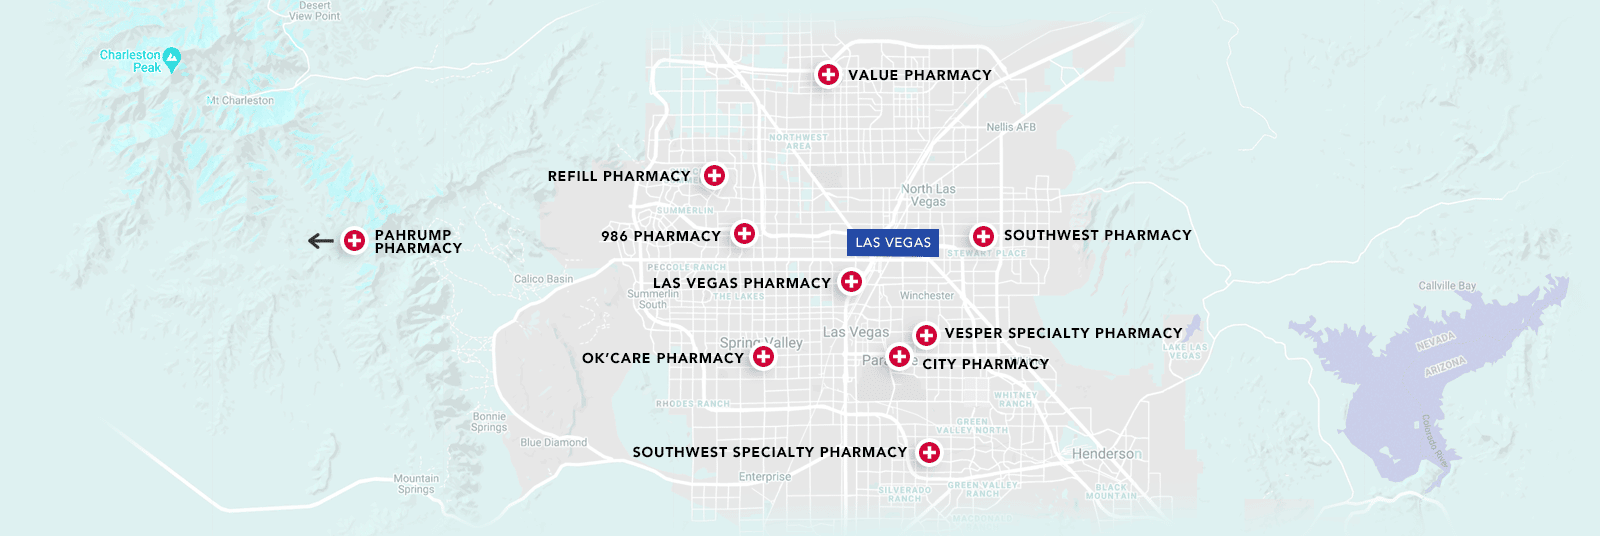 lien-rx-pharmacy-location-hotspot-map